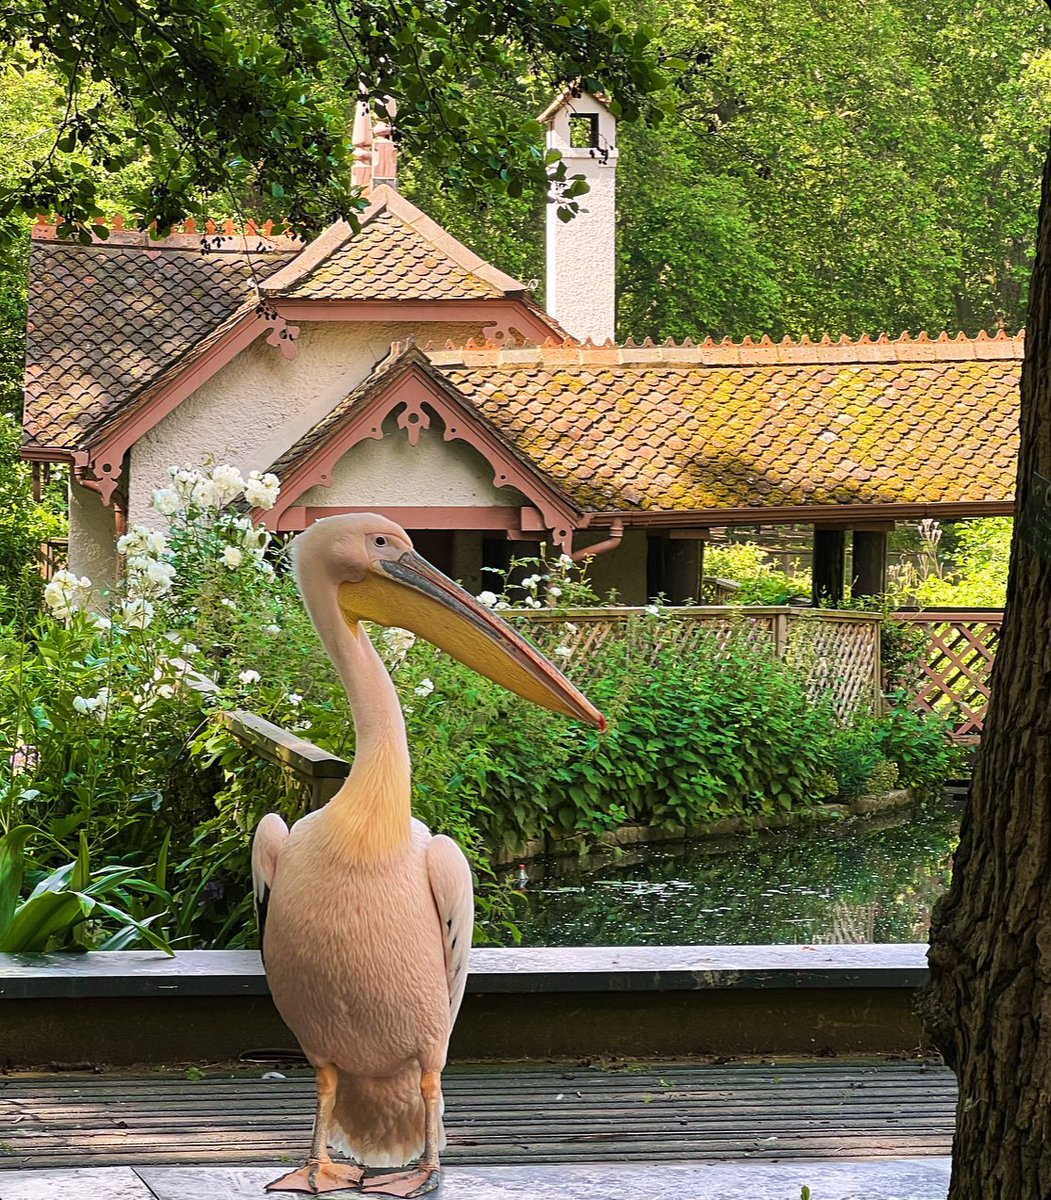 Strike a pose! Ornamental looking pelican in St James's Park, London! #Royalparks #London #StJamesspark #Pelican